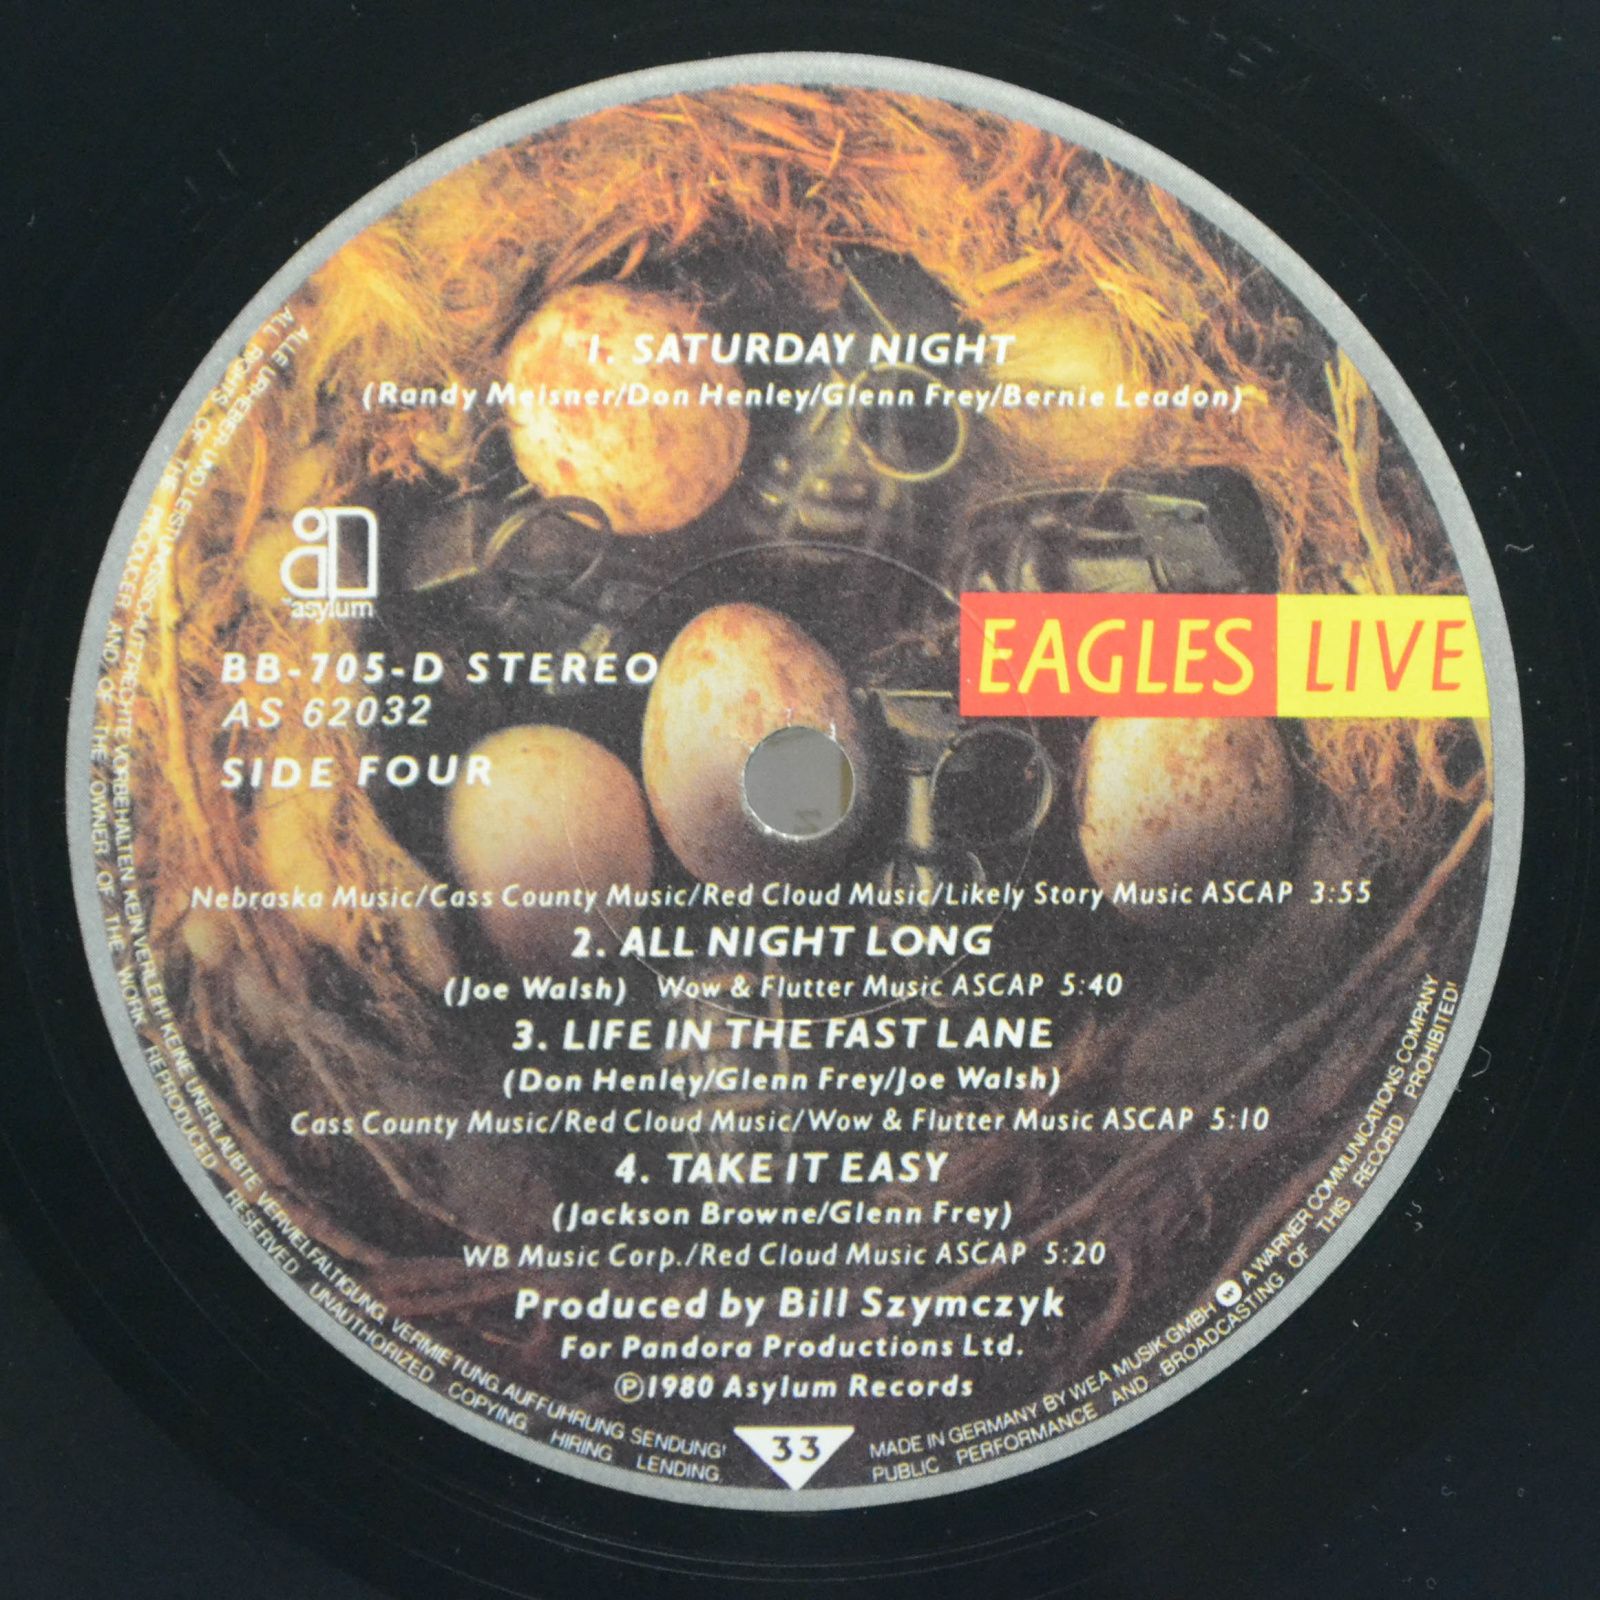 Eagles — Eagles Live (2LP), 1980